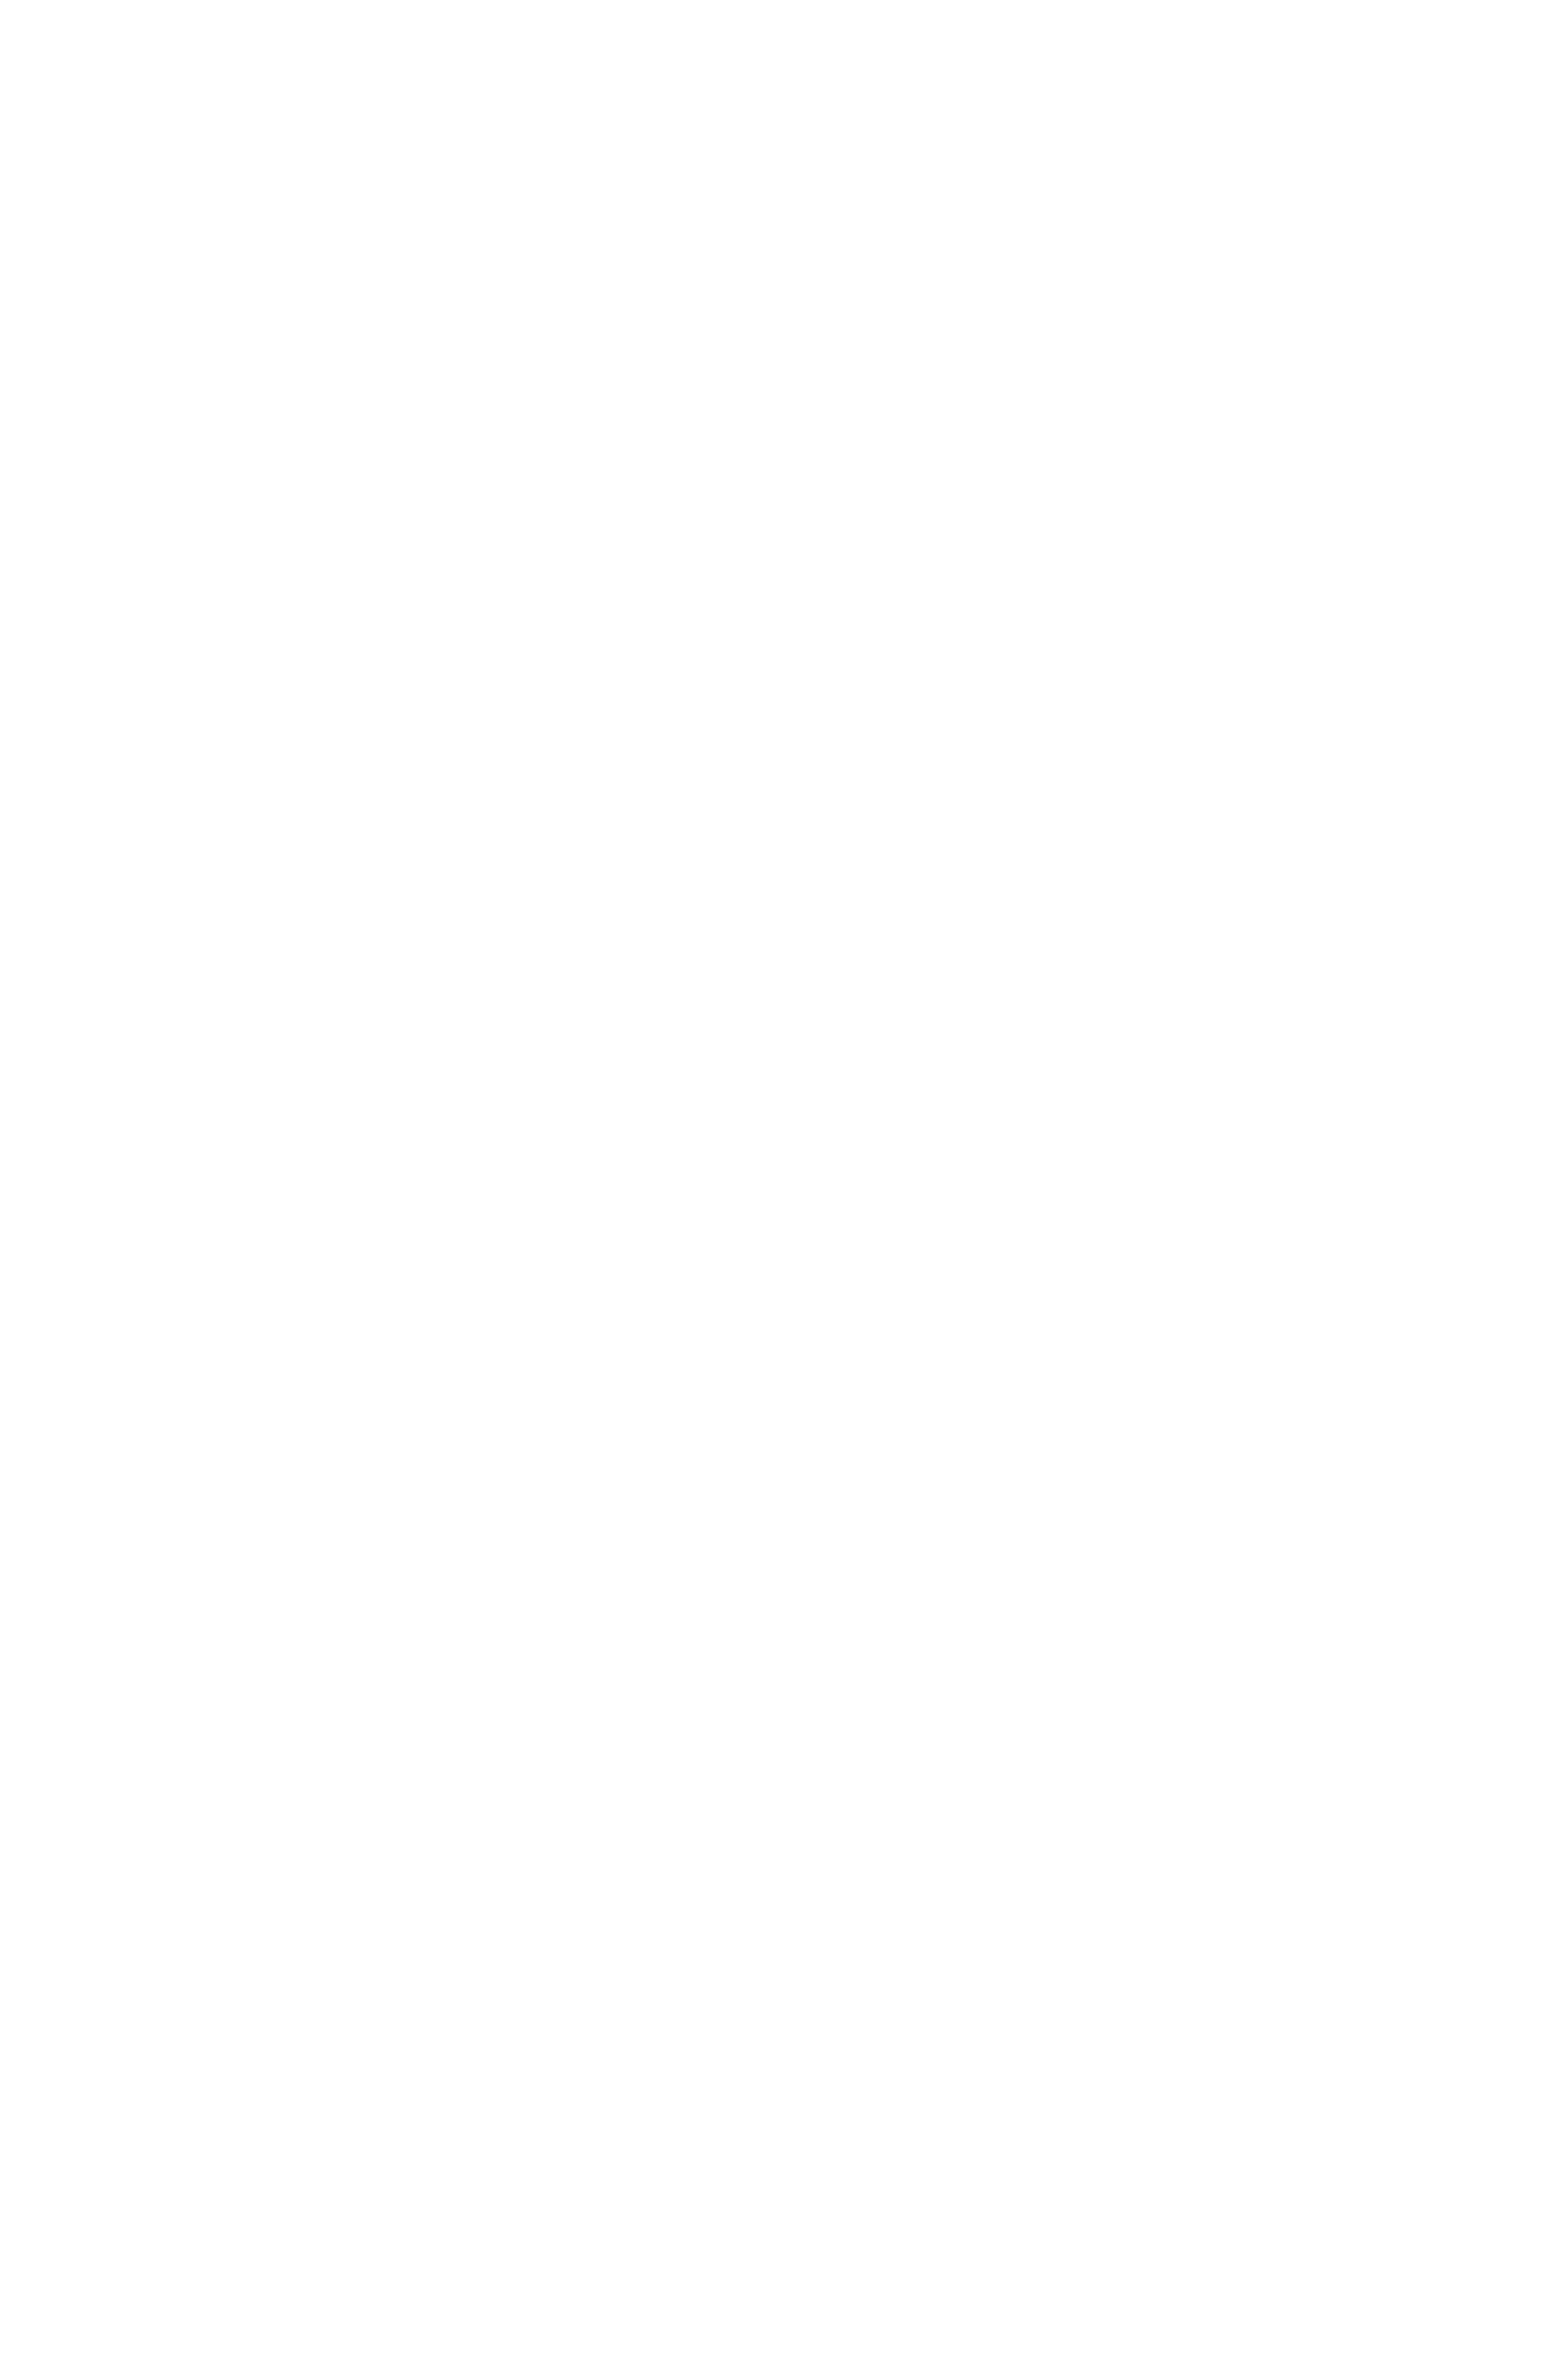 Coyoc Logo PNG 02